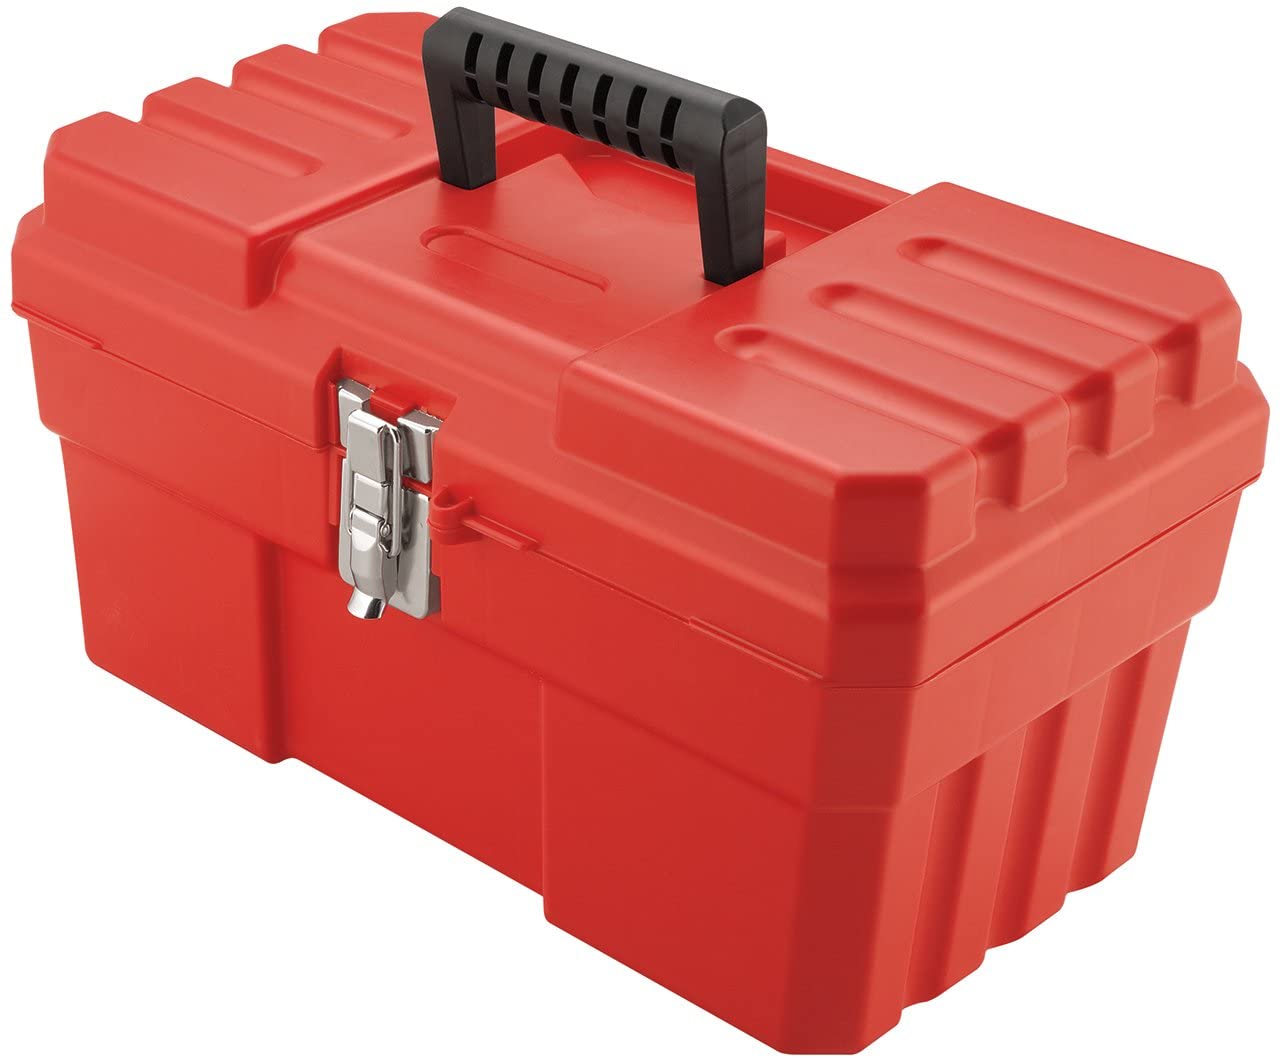 Akro-Mils 09514 ProBox Steel Latch Tool Box